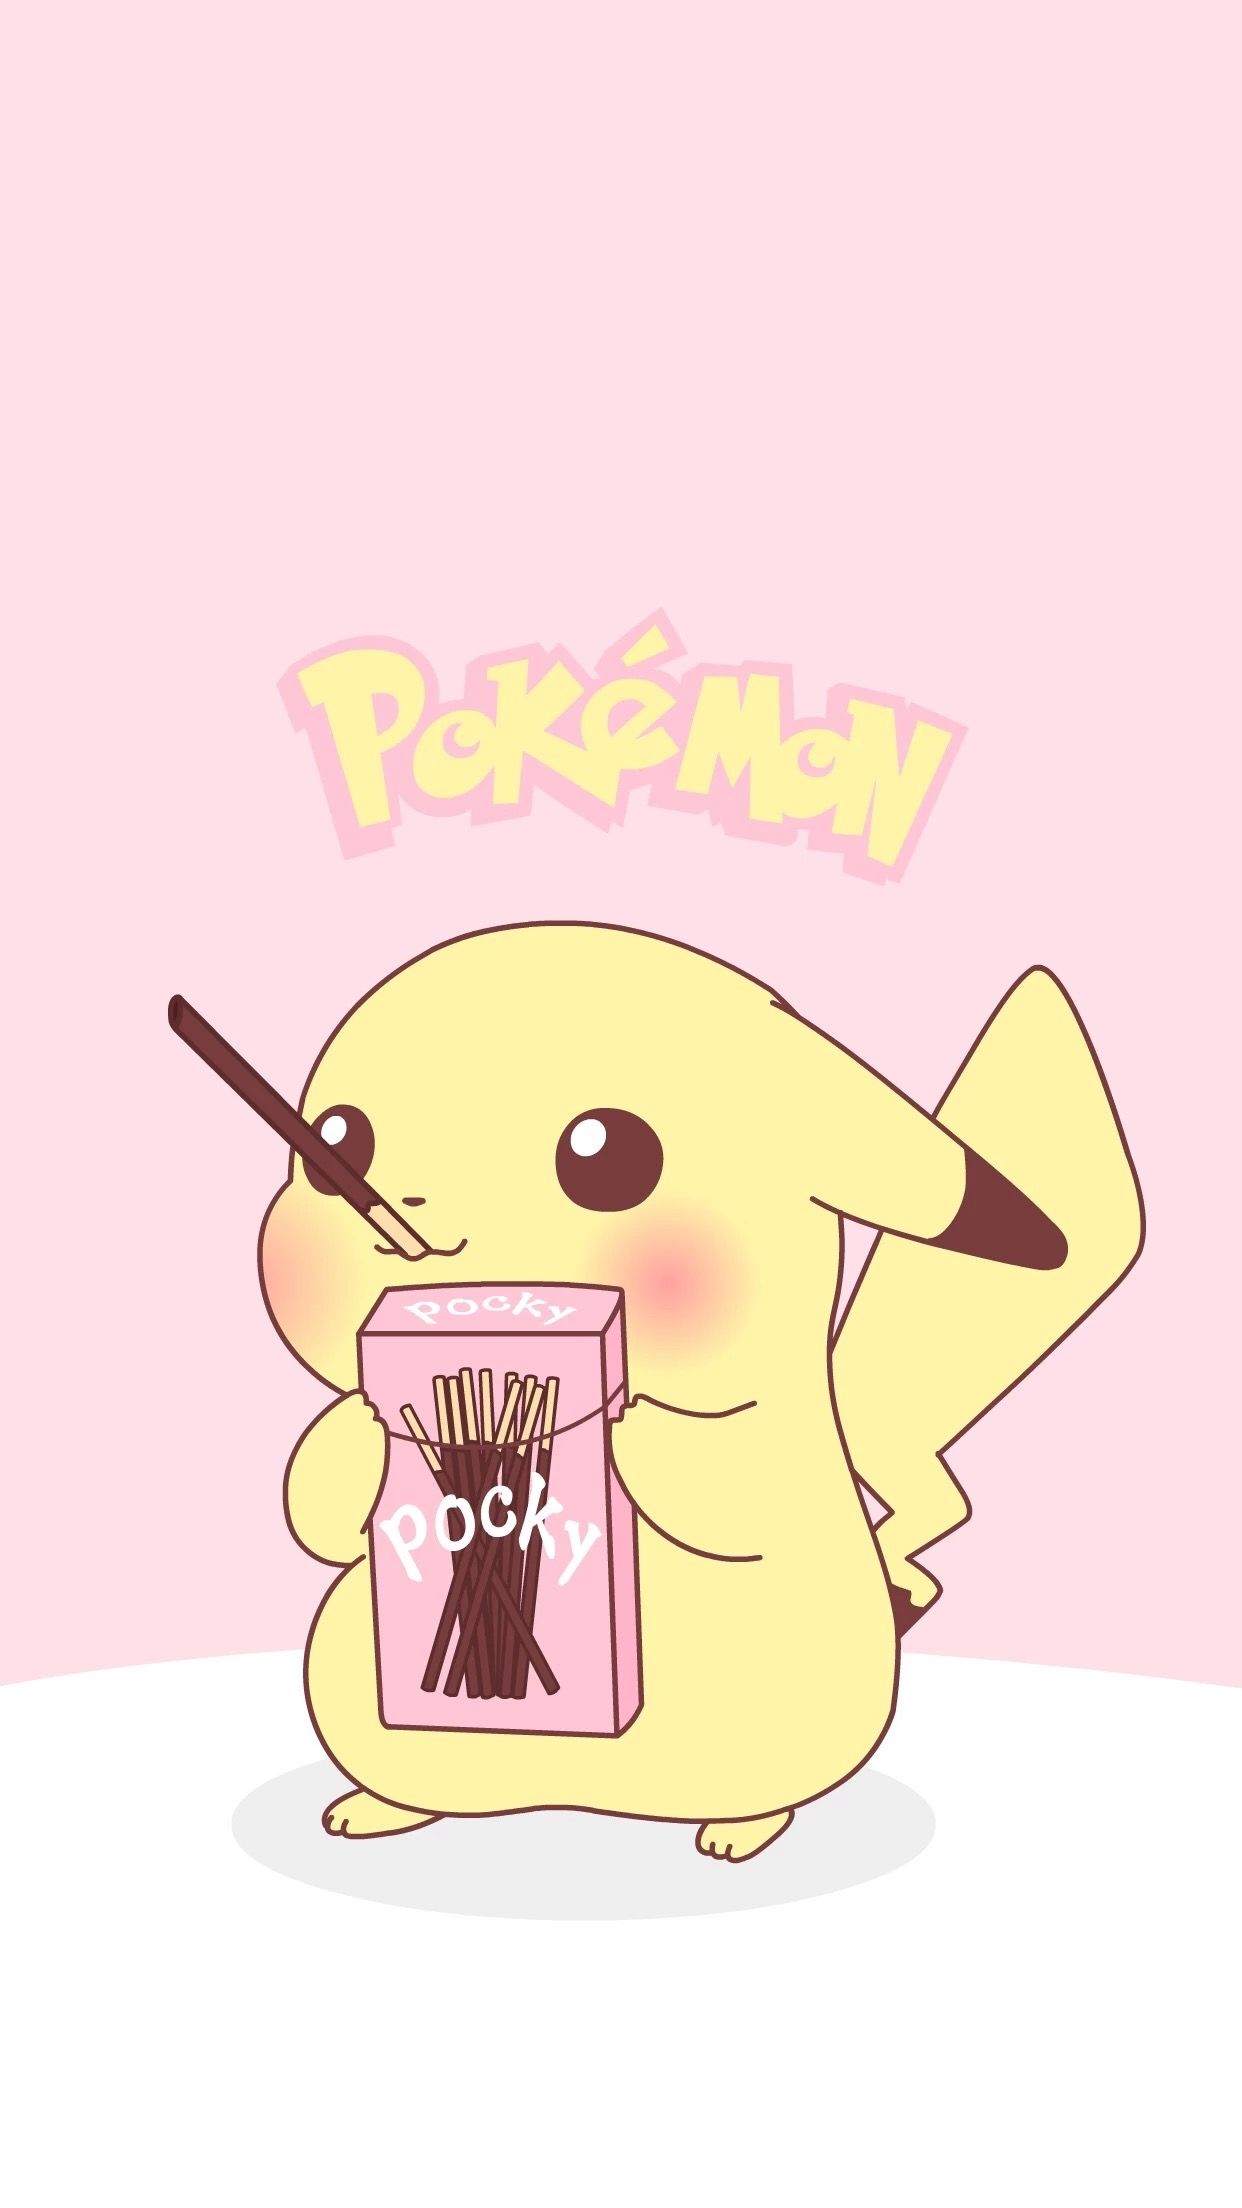 pokemon wallpaper,karikatur,illustration,rosa,gelb,kunst